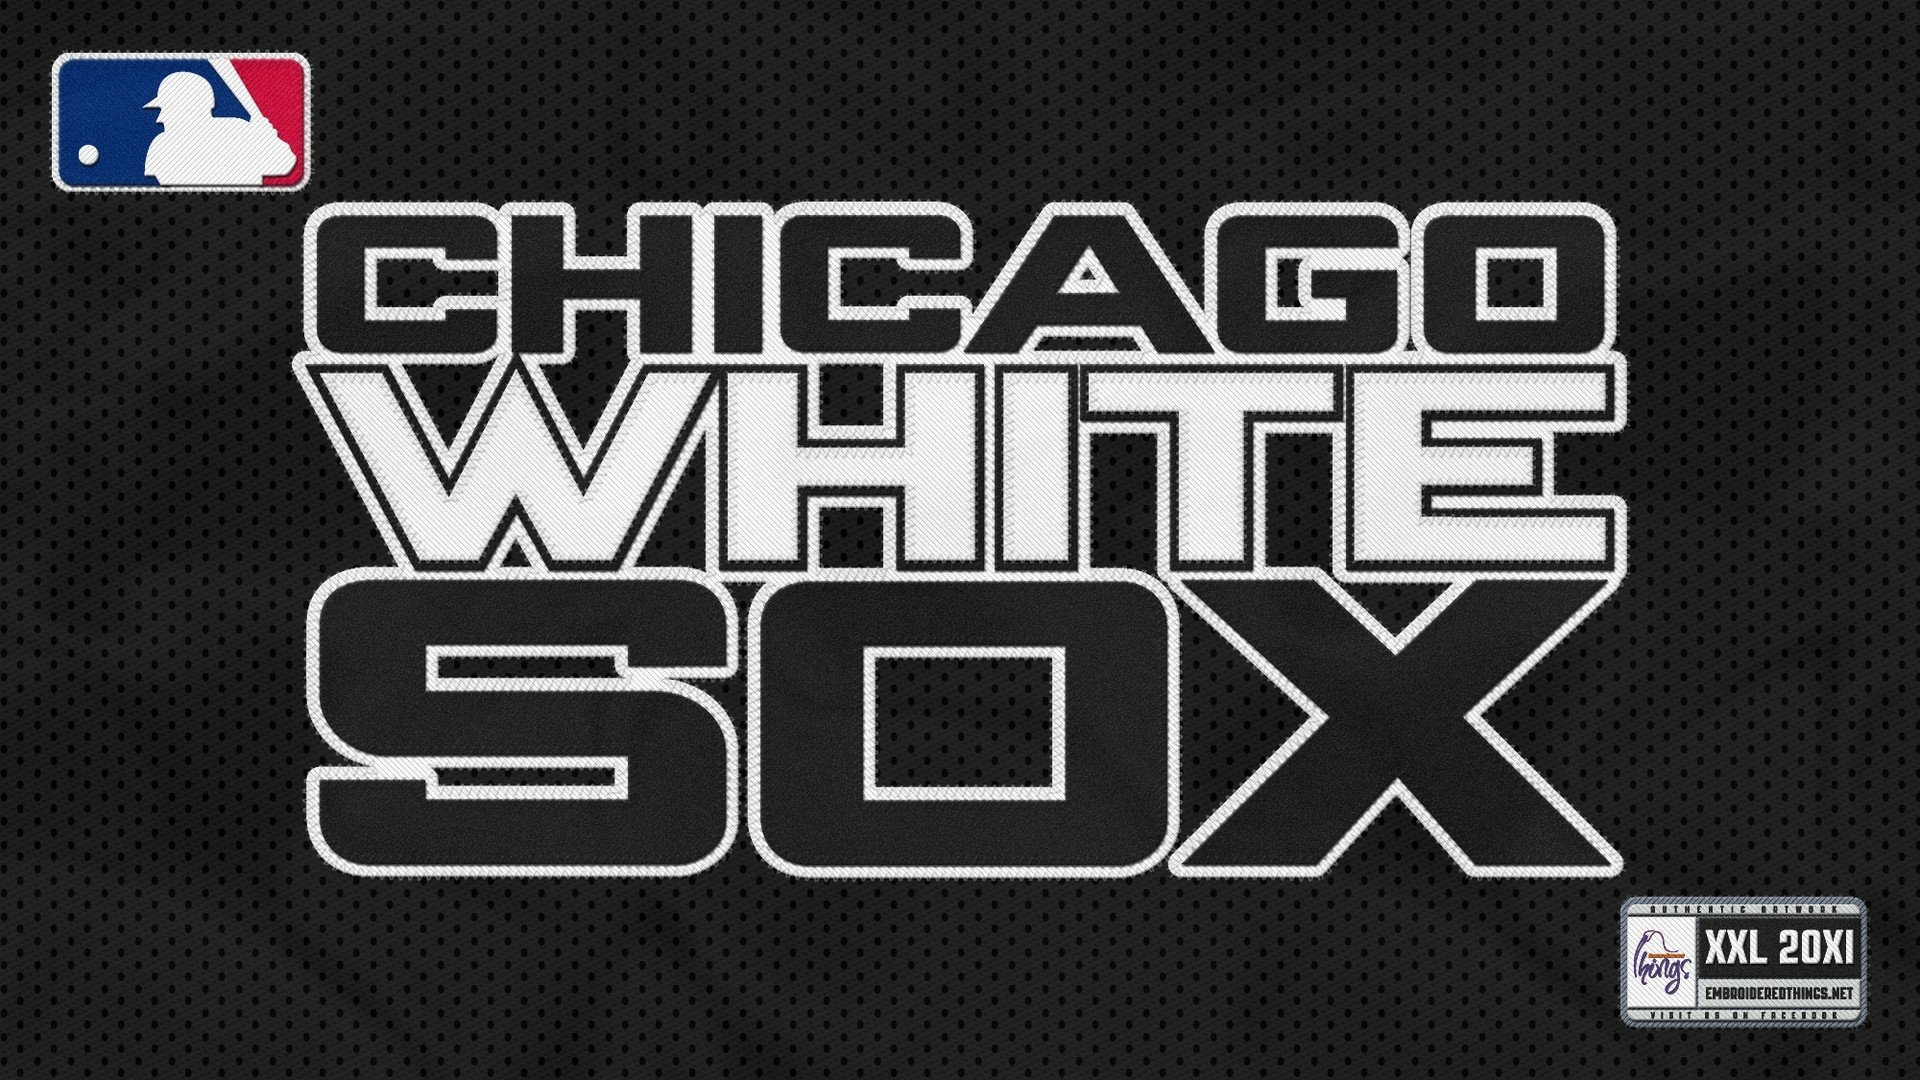 wallpaper chicago white sox